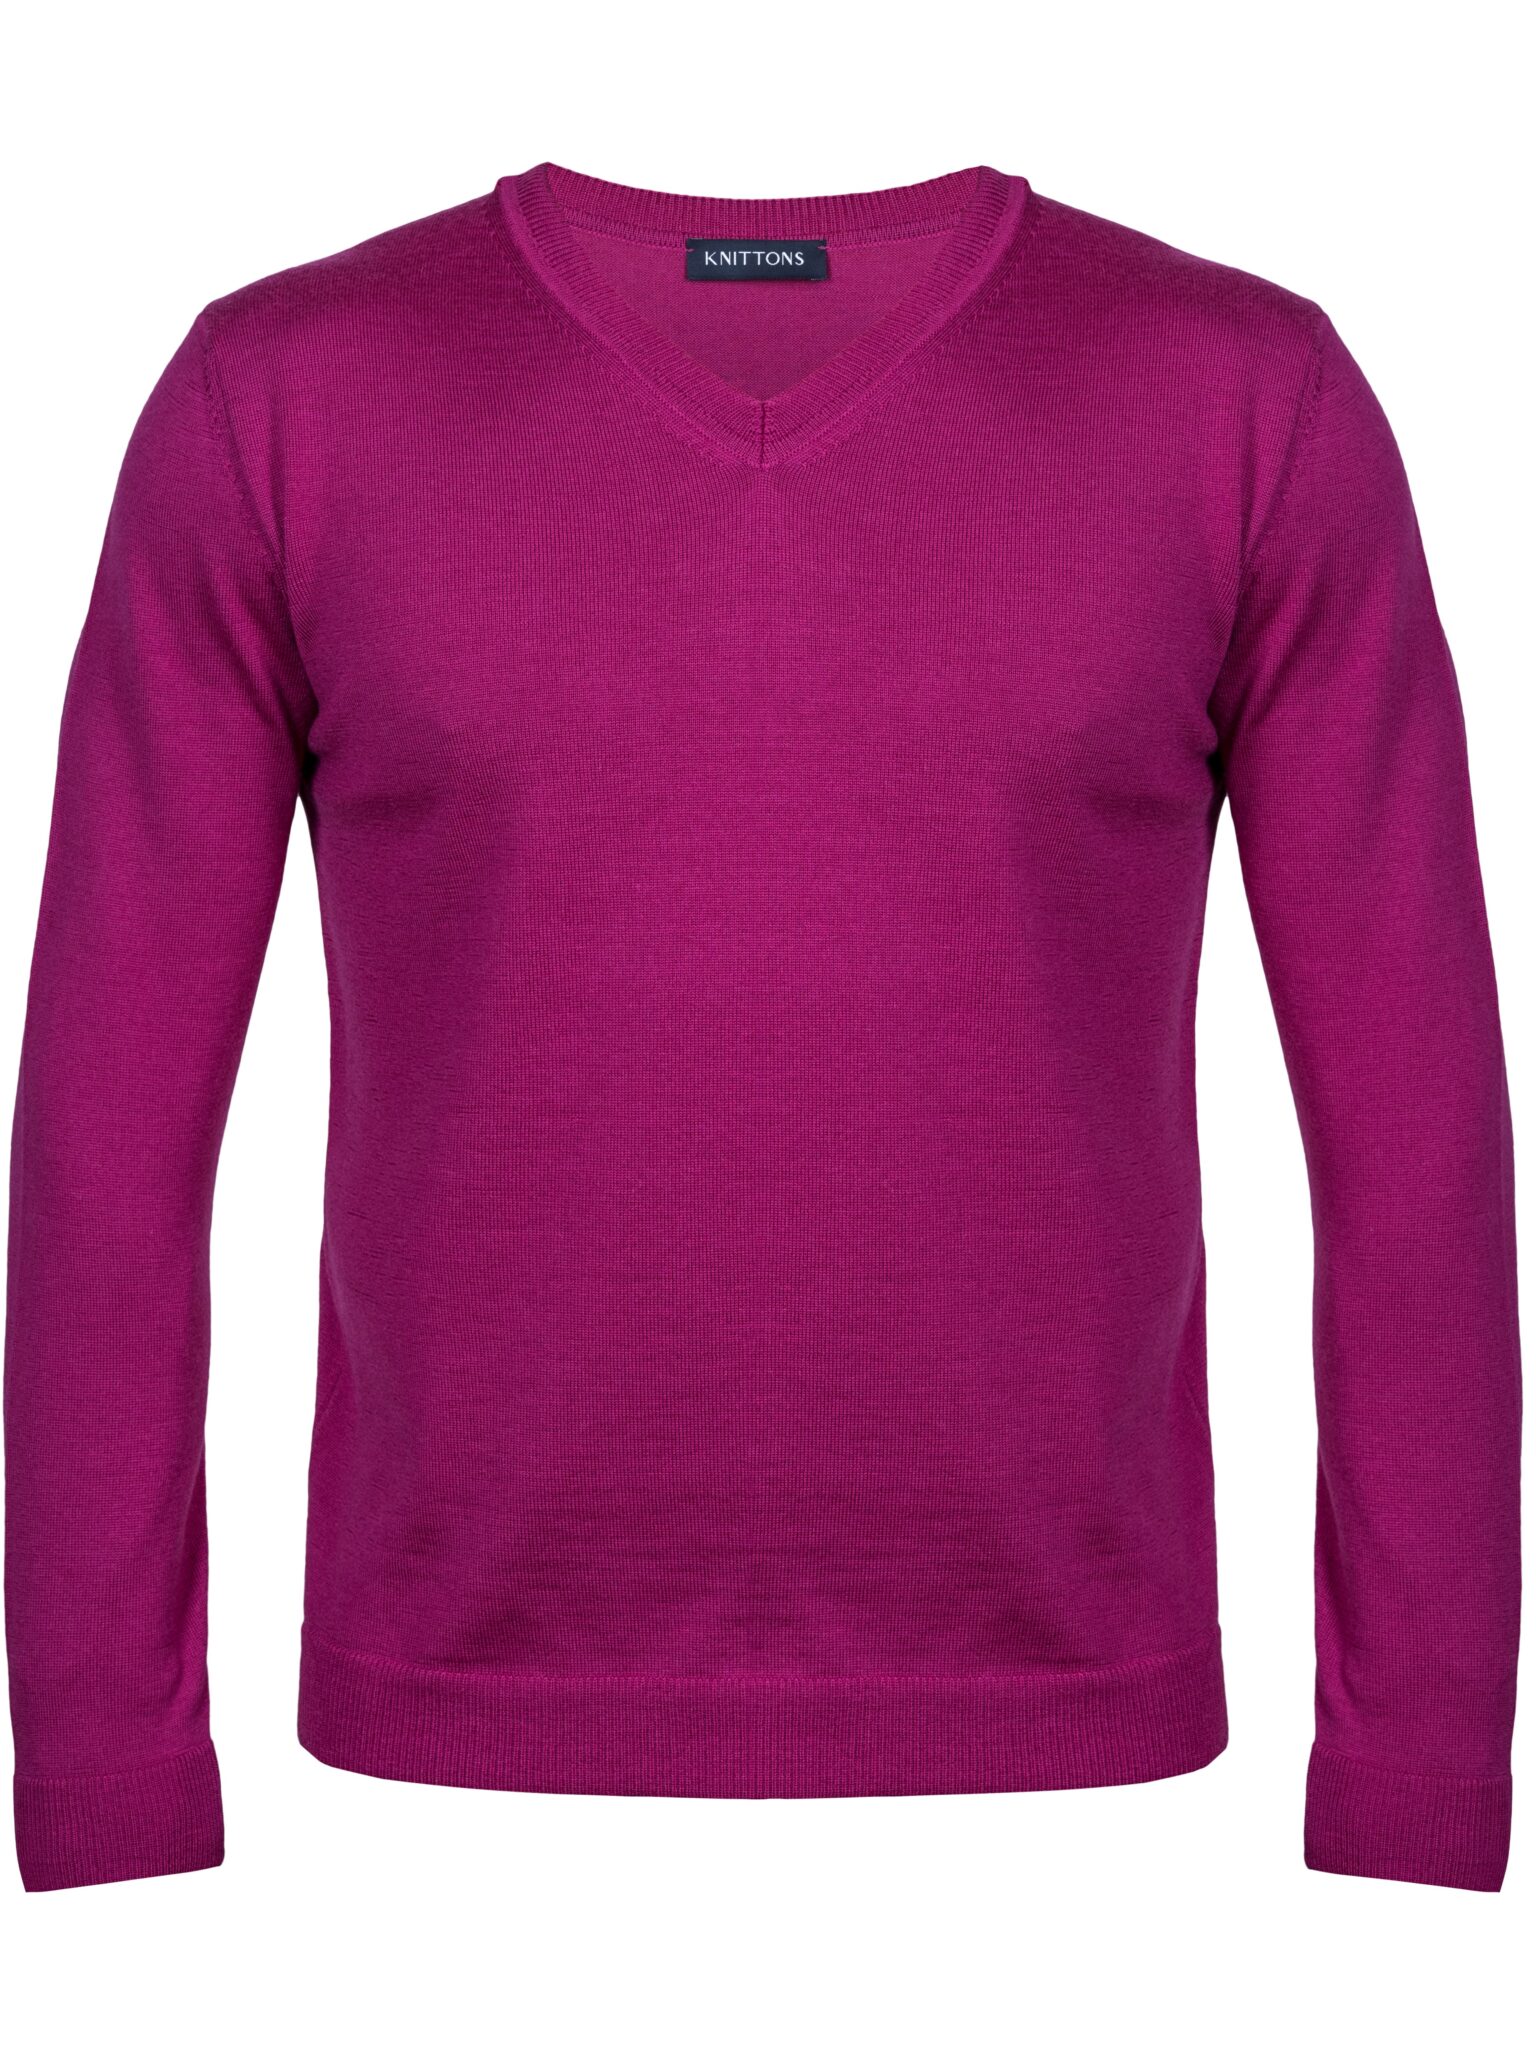 Men's V-Neck Sweater Pullover, Fuchsia